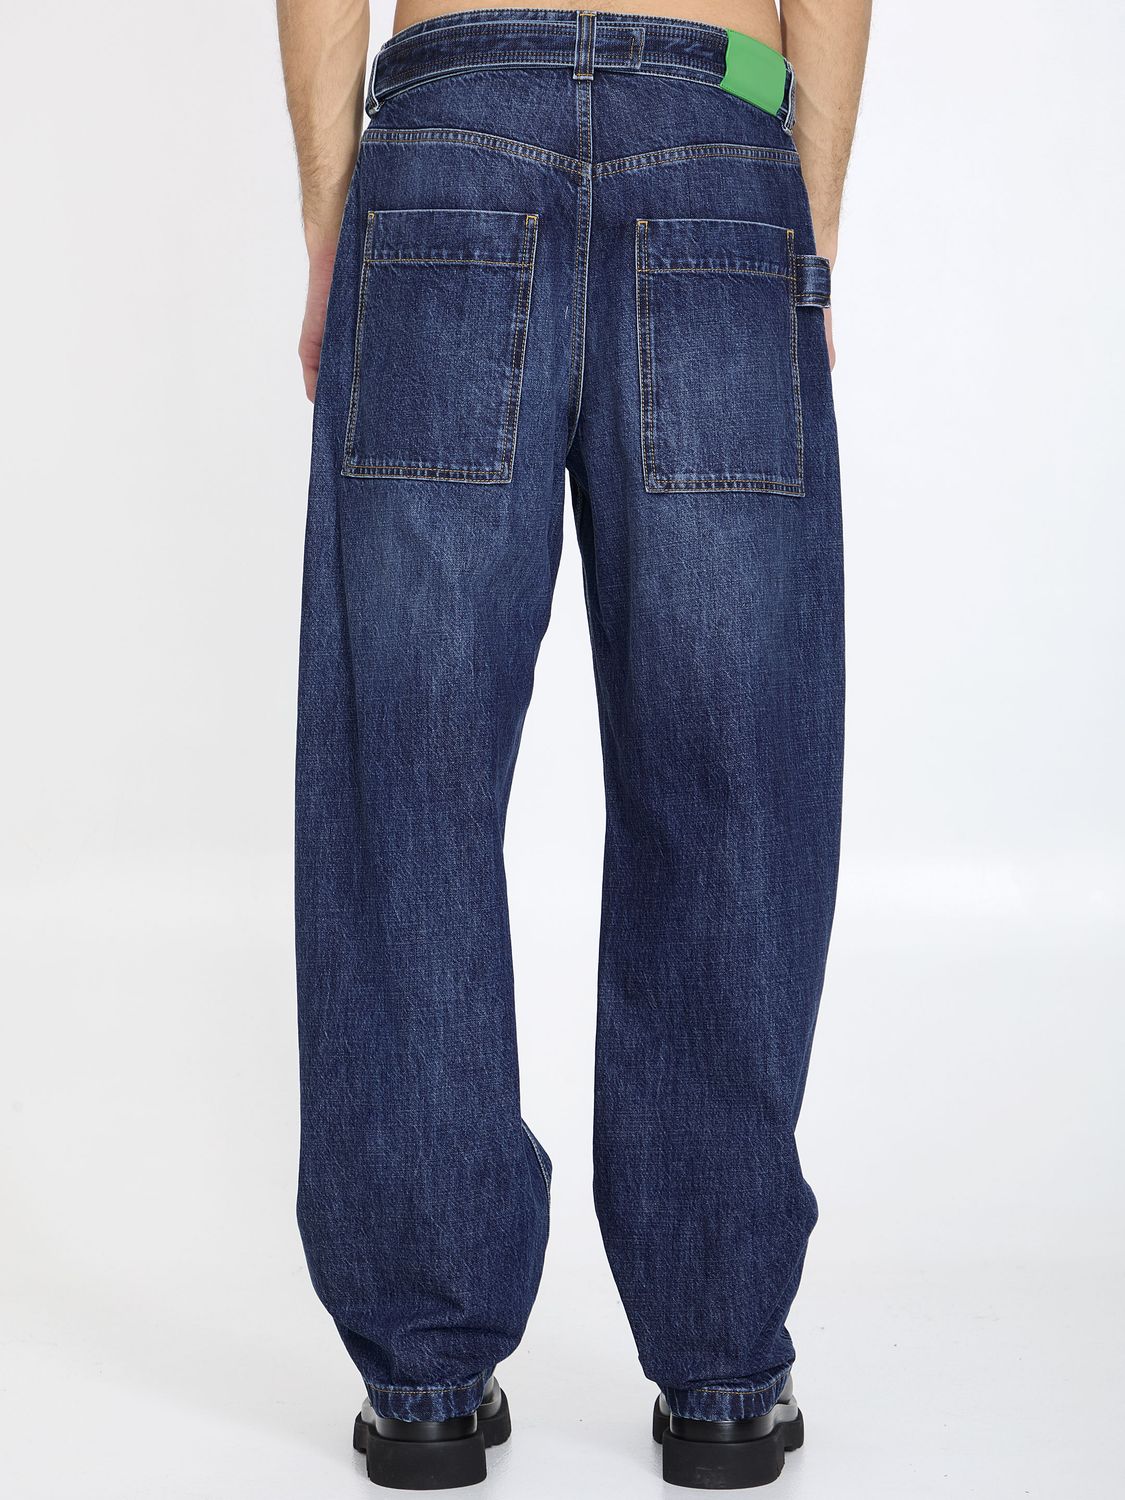 Wide-Leg Denim Jeans for Men with Belt in Light Blue